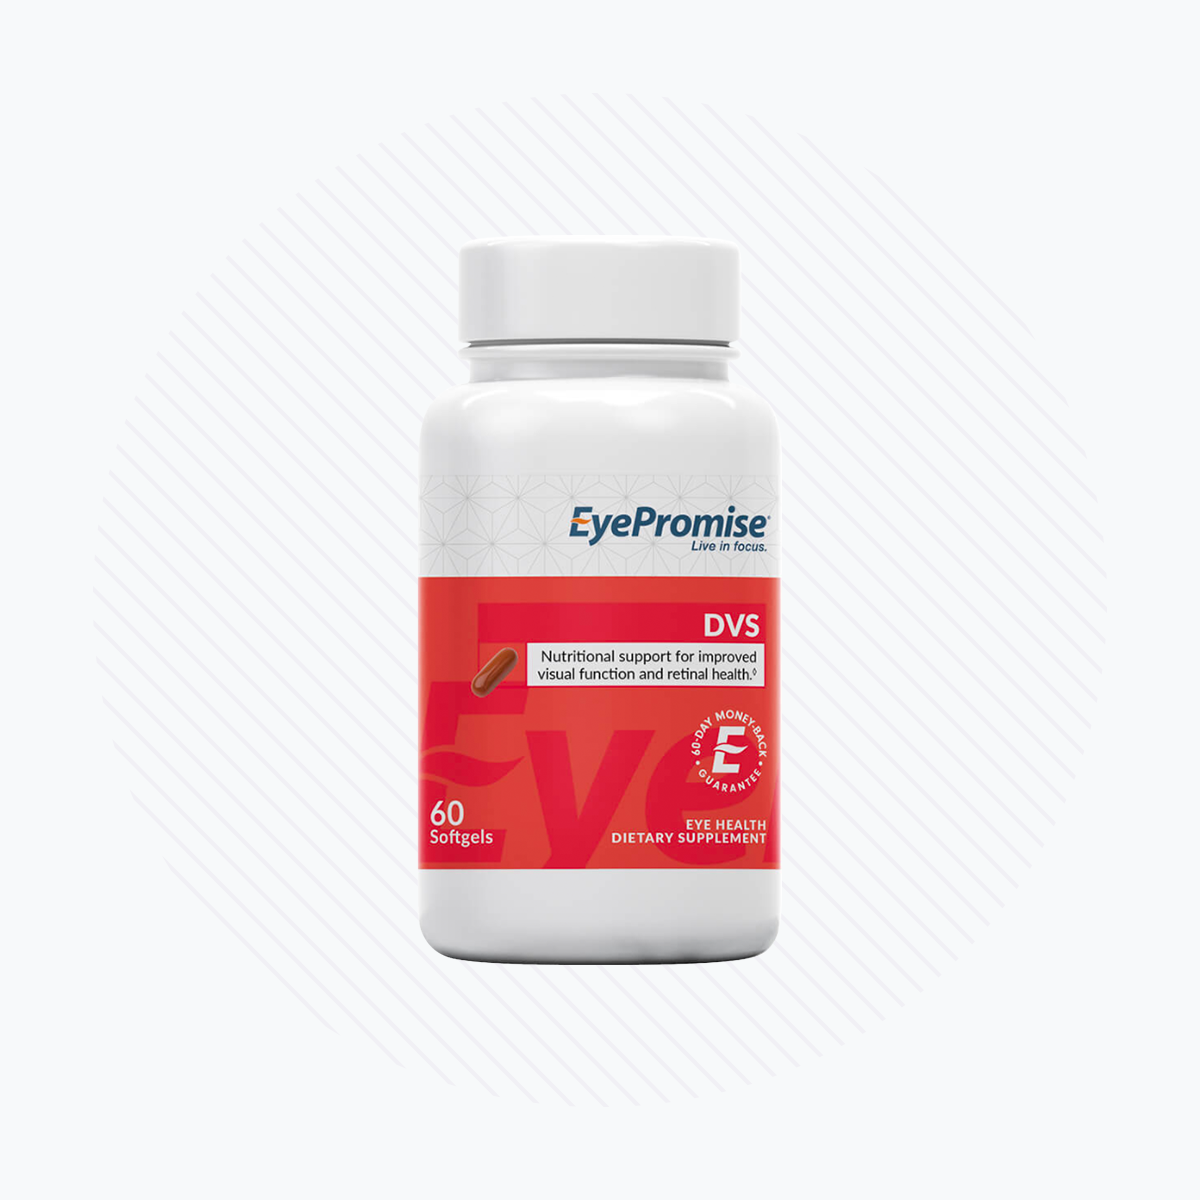 EyePromise DVS Eye Vitamin, Retinal Support for Diabetic Retinopathy - 60 Ct